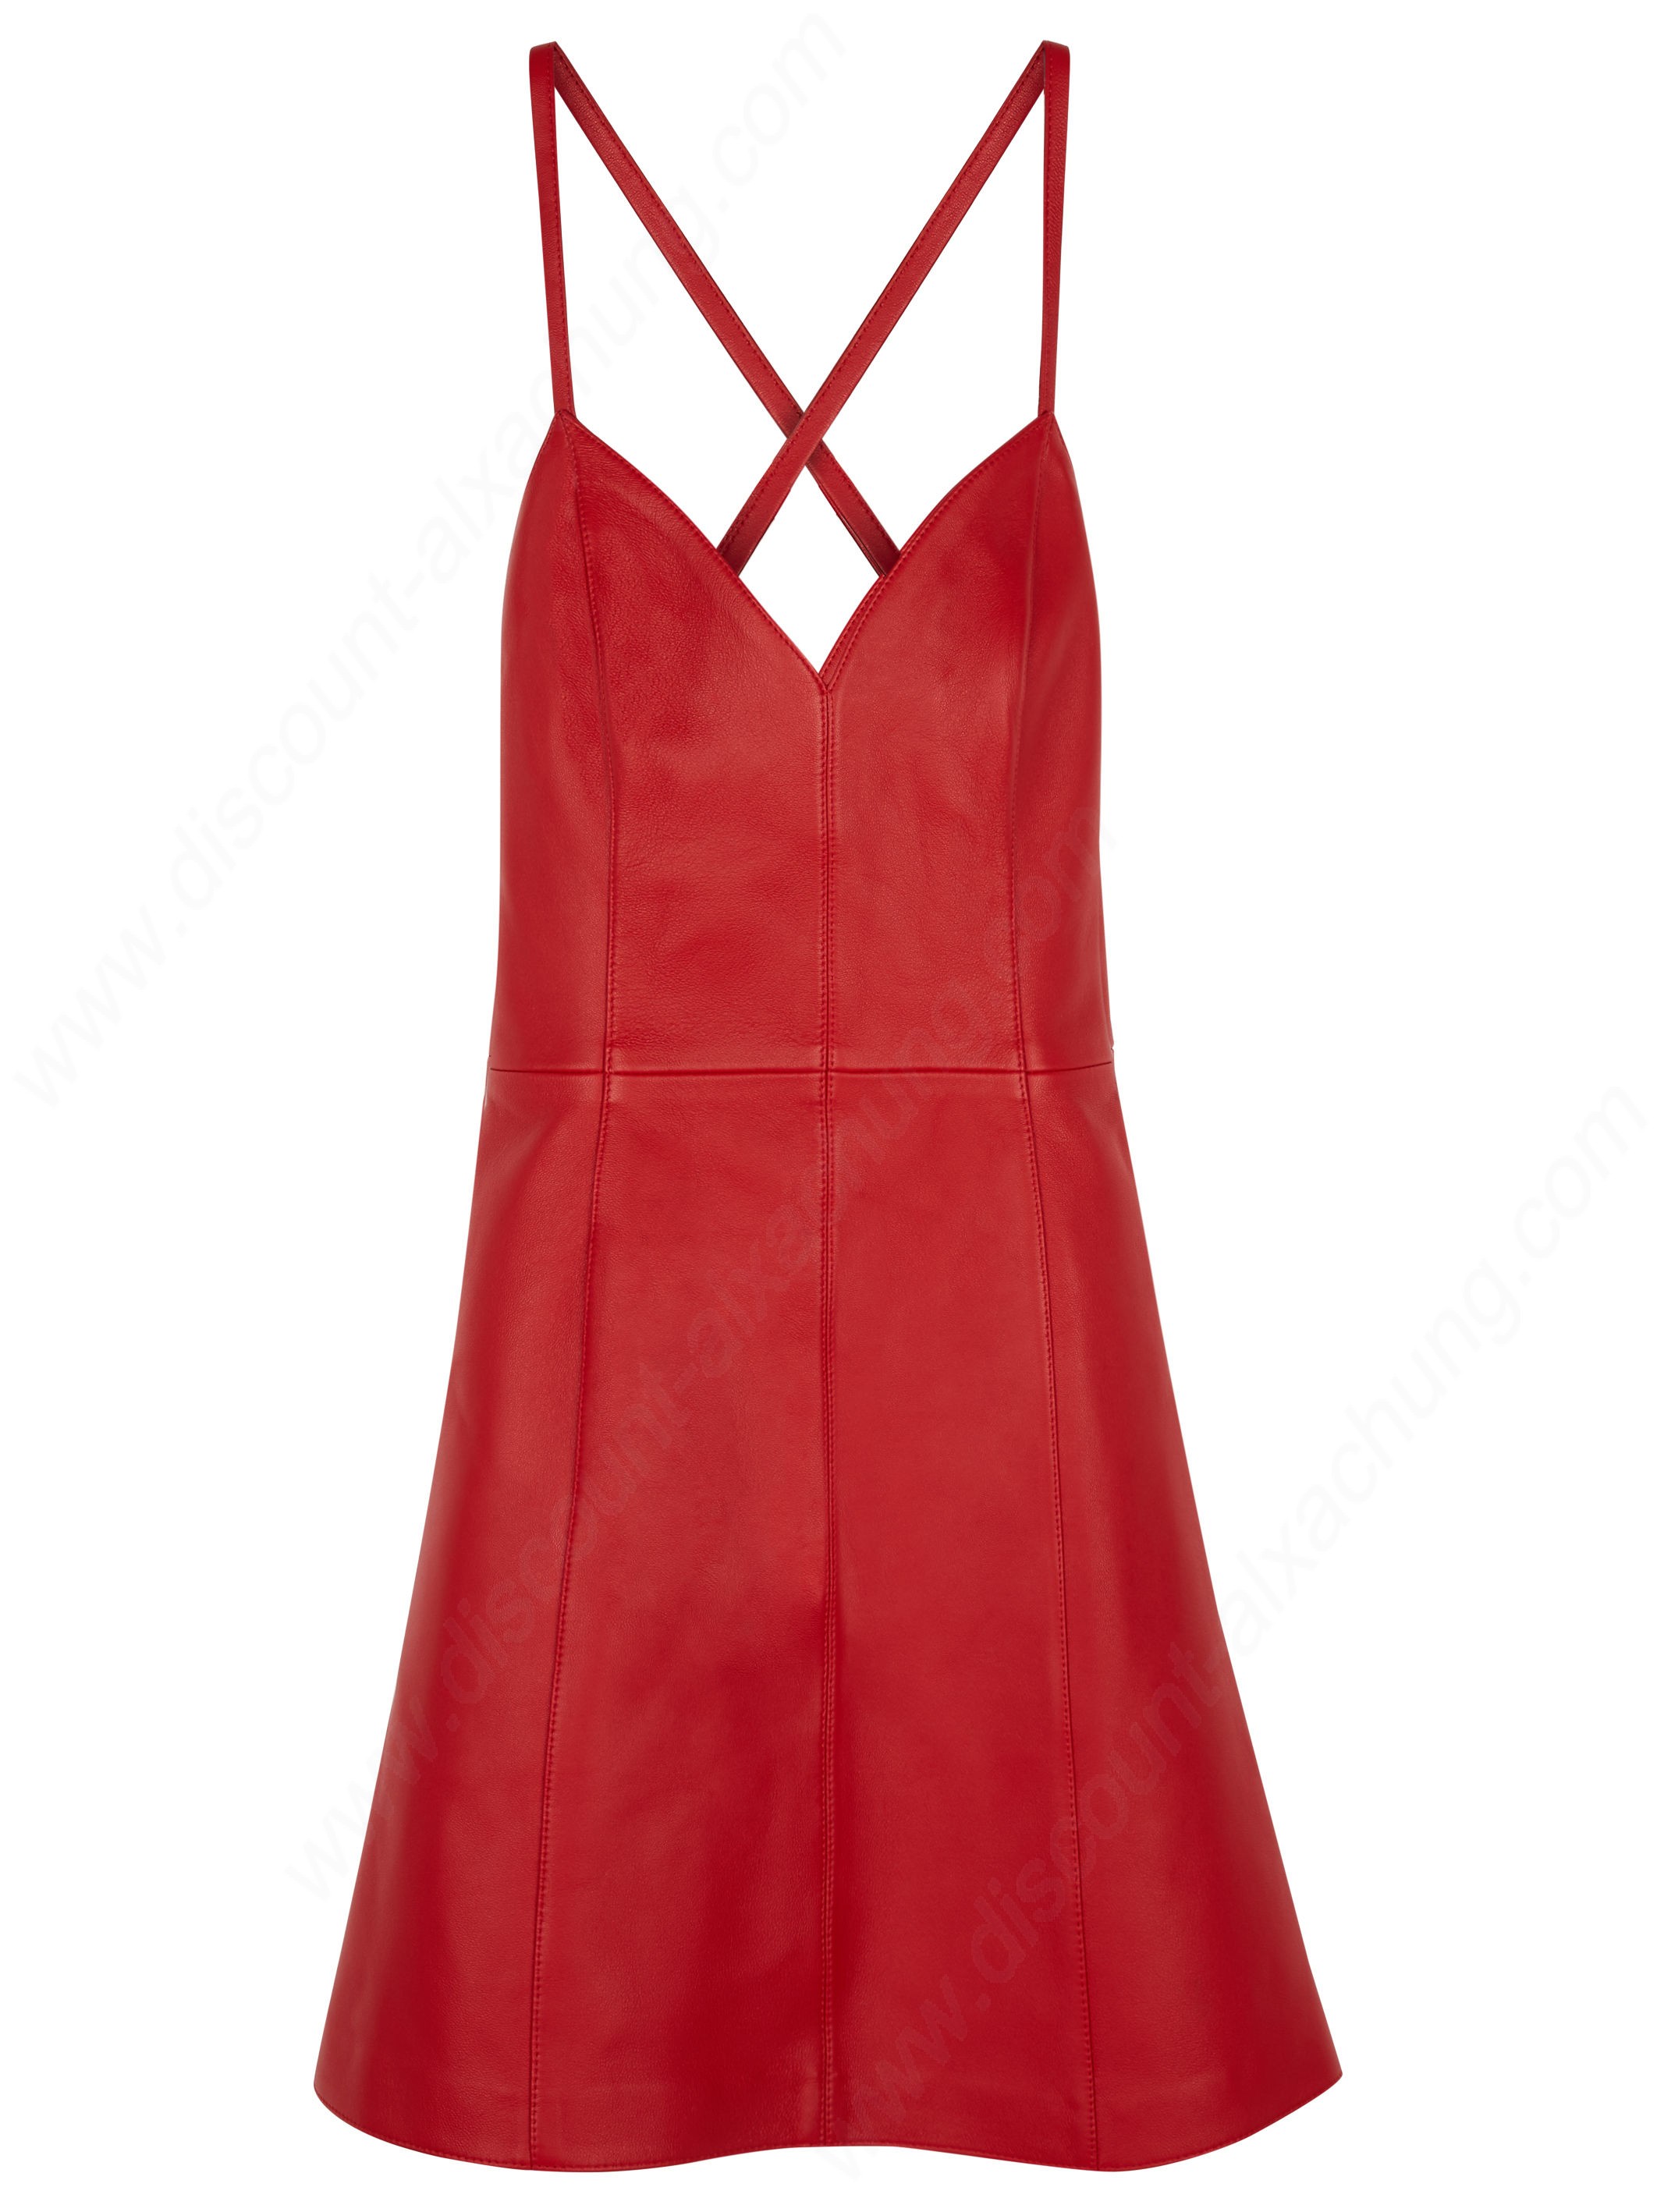 Alexachung Leather Strap Mini Dress - Alexachung Leather Strap Mini Dress